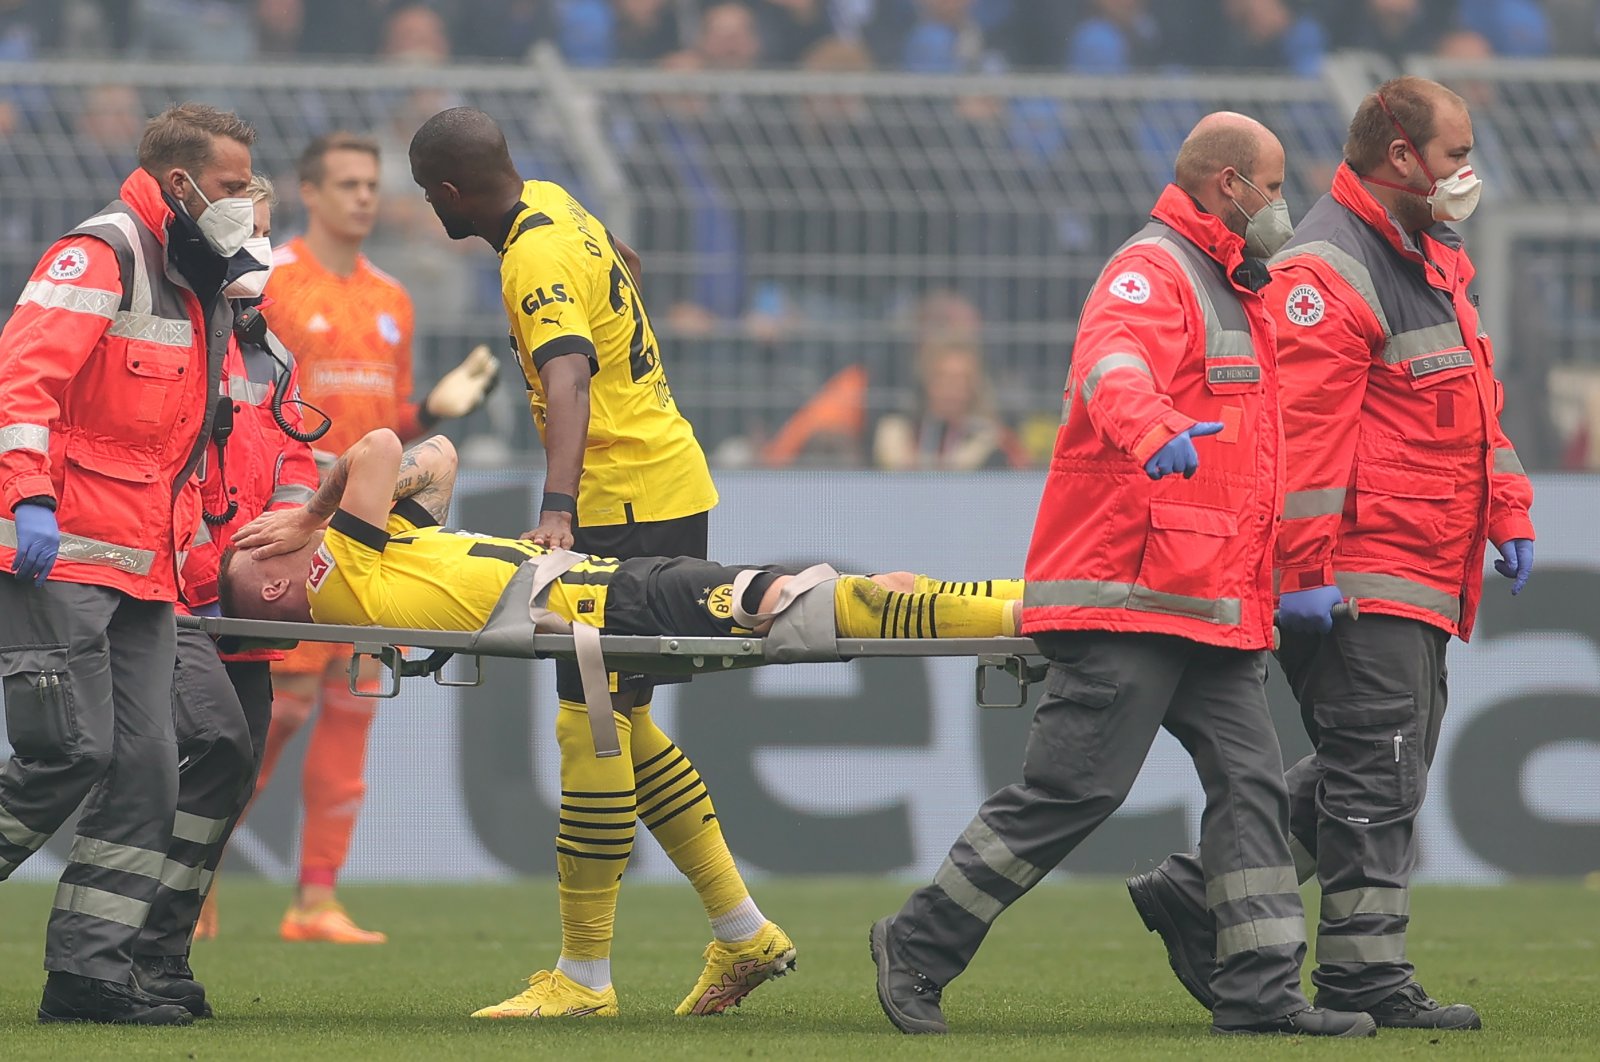 Injured Dortmund&#039;s Marco Reus is taken off the pitch in the German Bundesliga match between Borussia Dortmund and Schalke 04, Dortmund, Germany, Sept. 17, 2022. (EPA Photo)